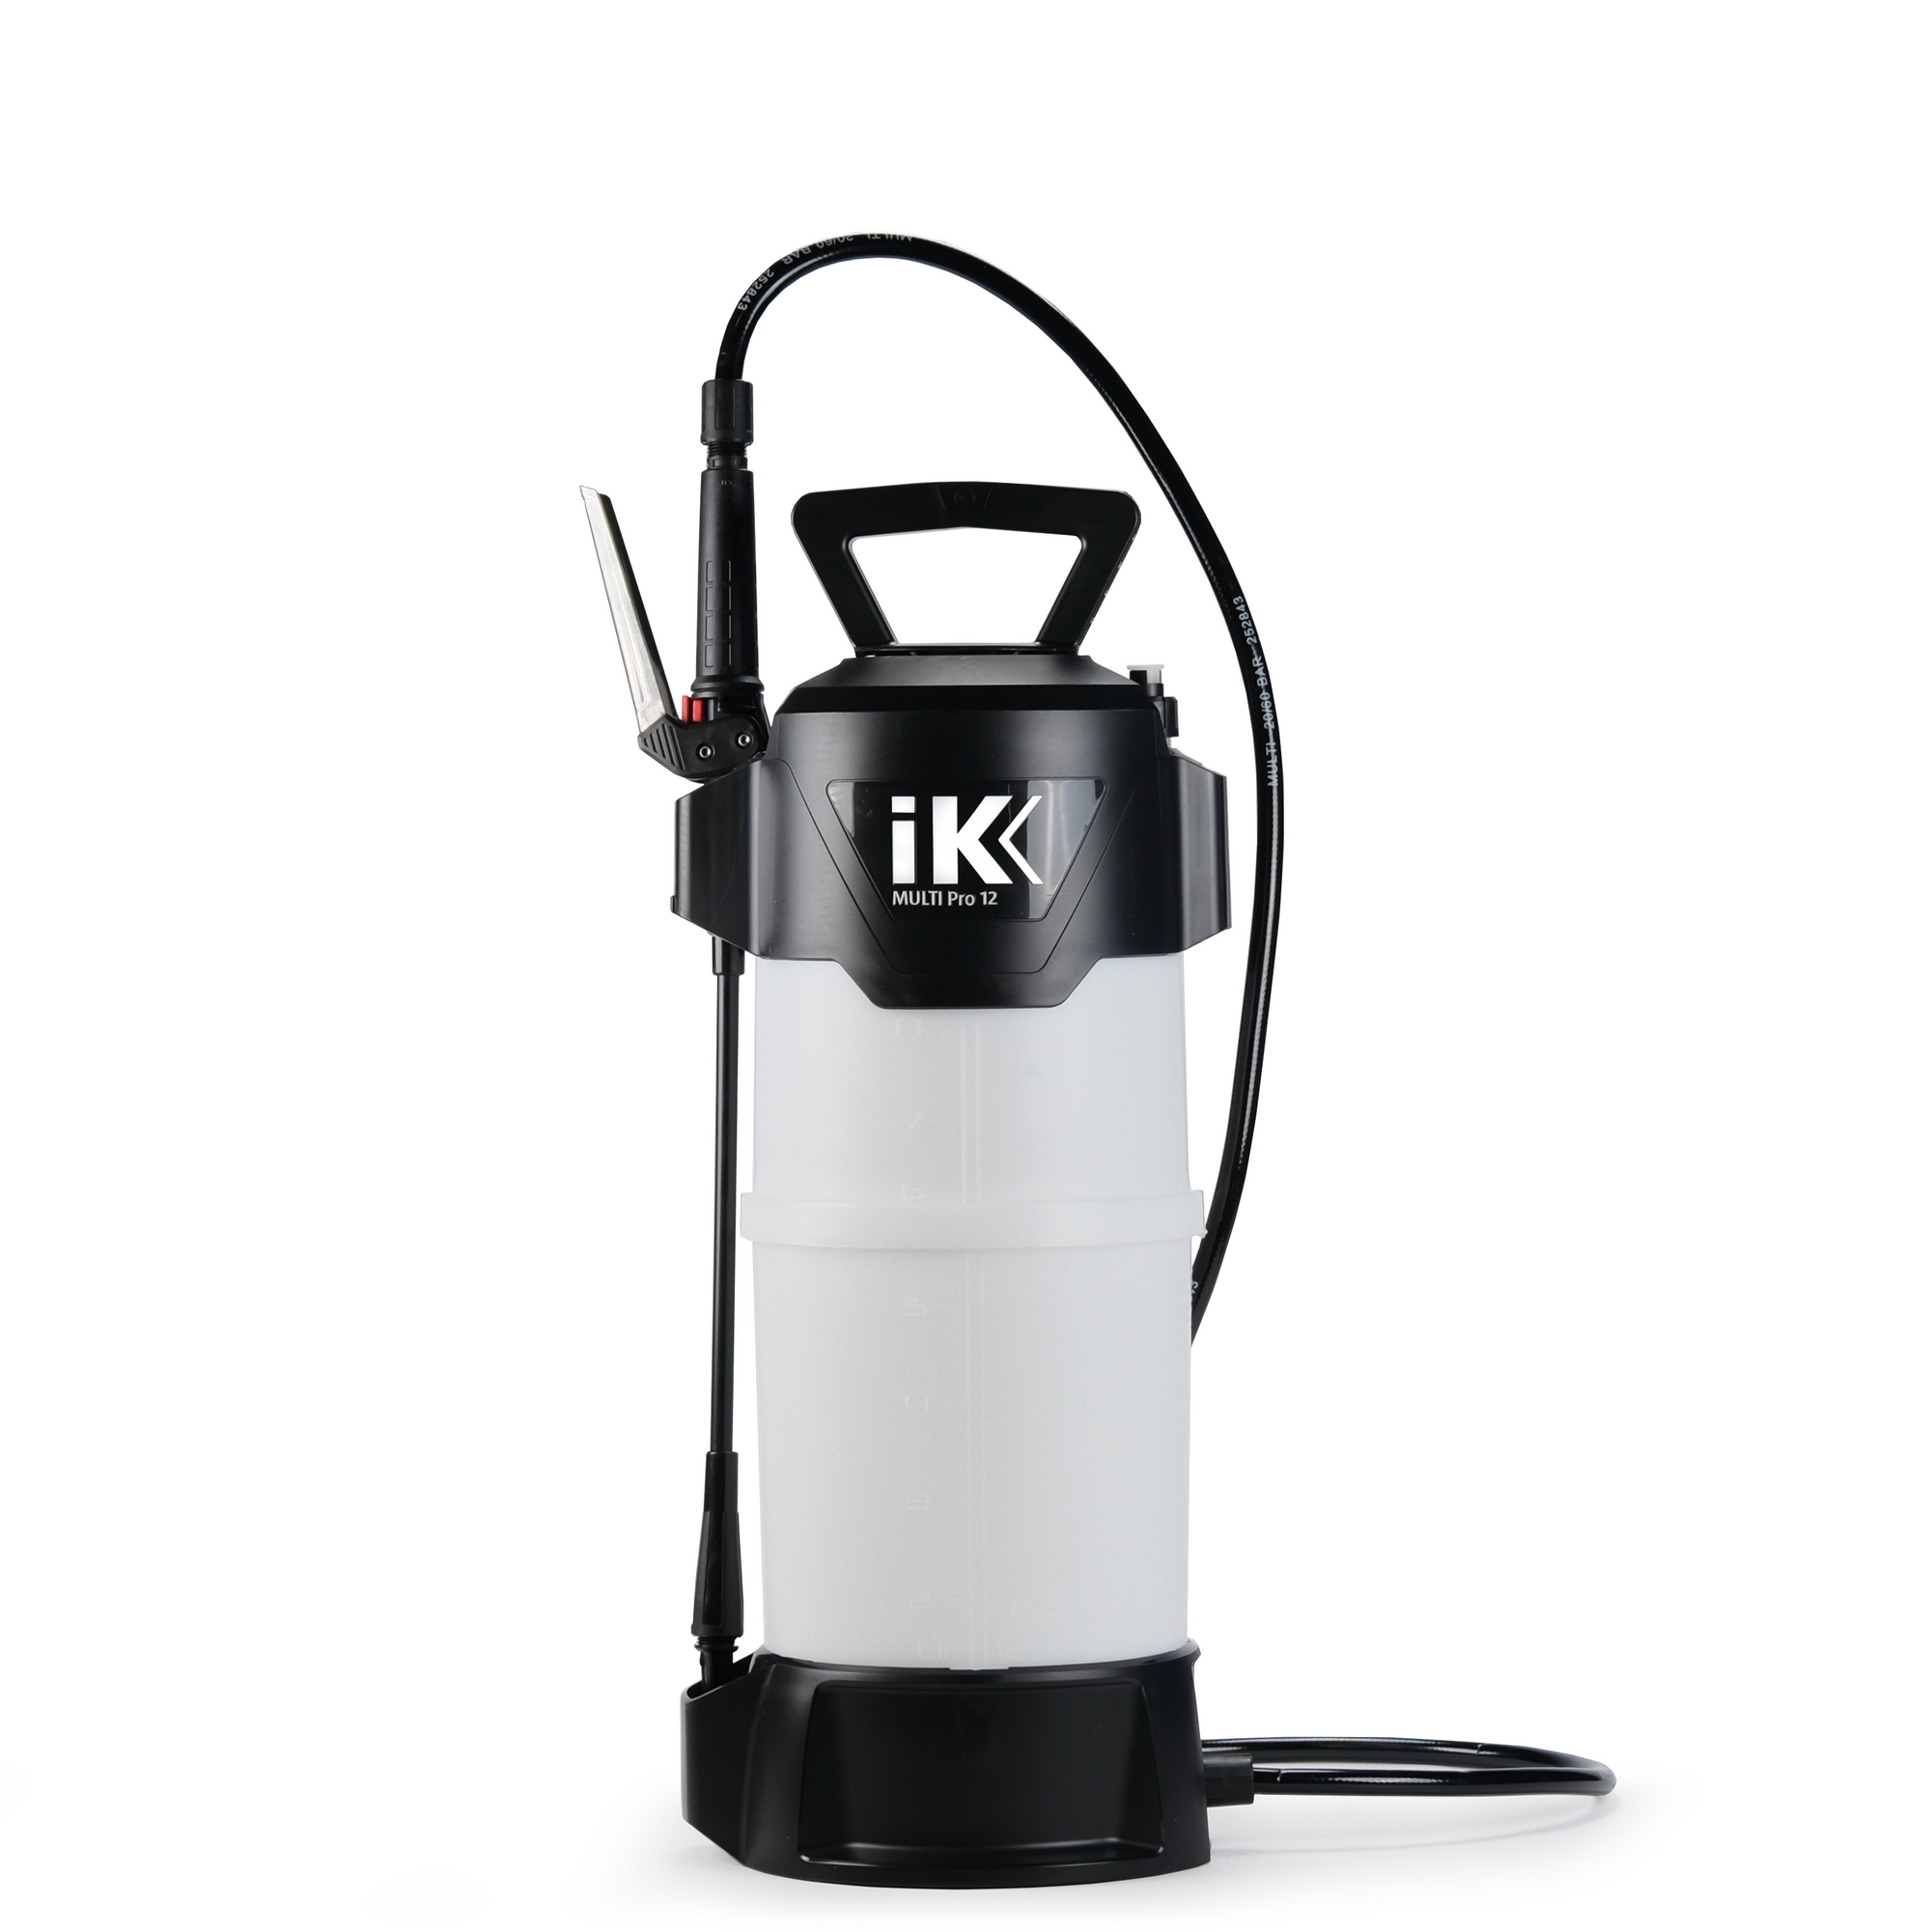 iK E Foam Pro 12 with Battery Powered Air Compressor (Foaming